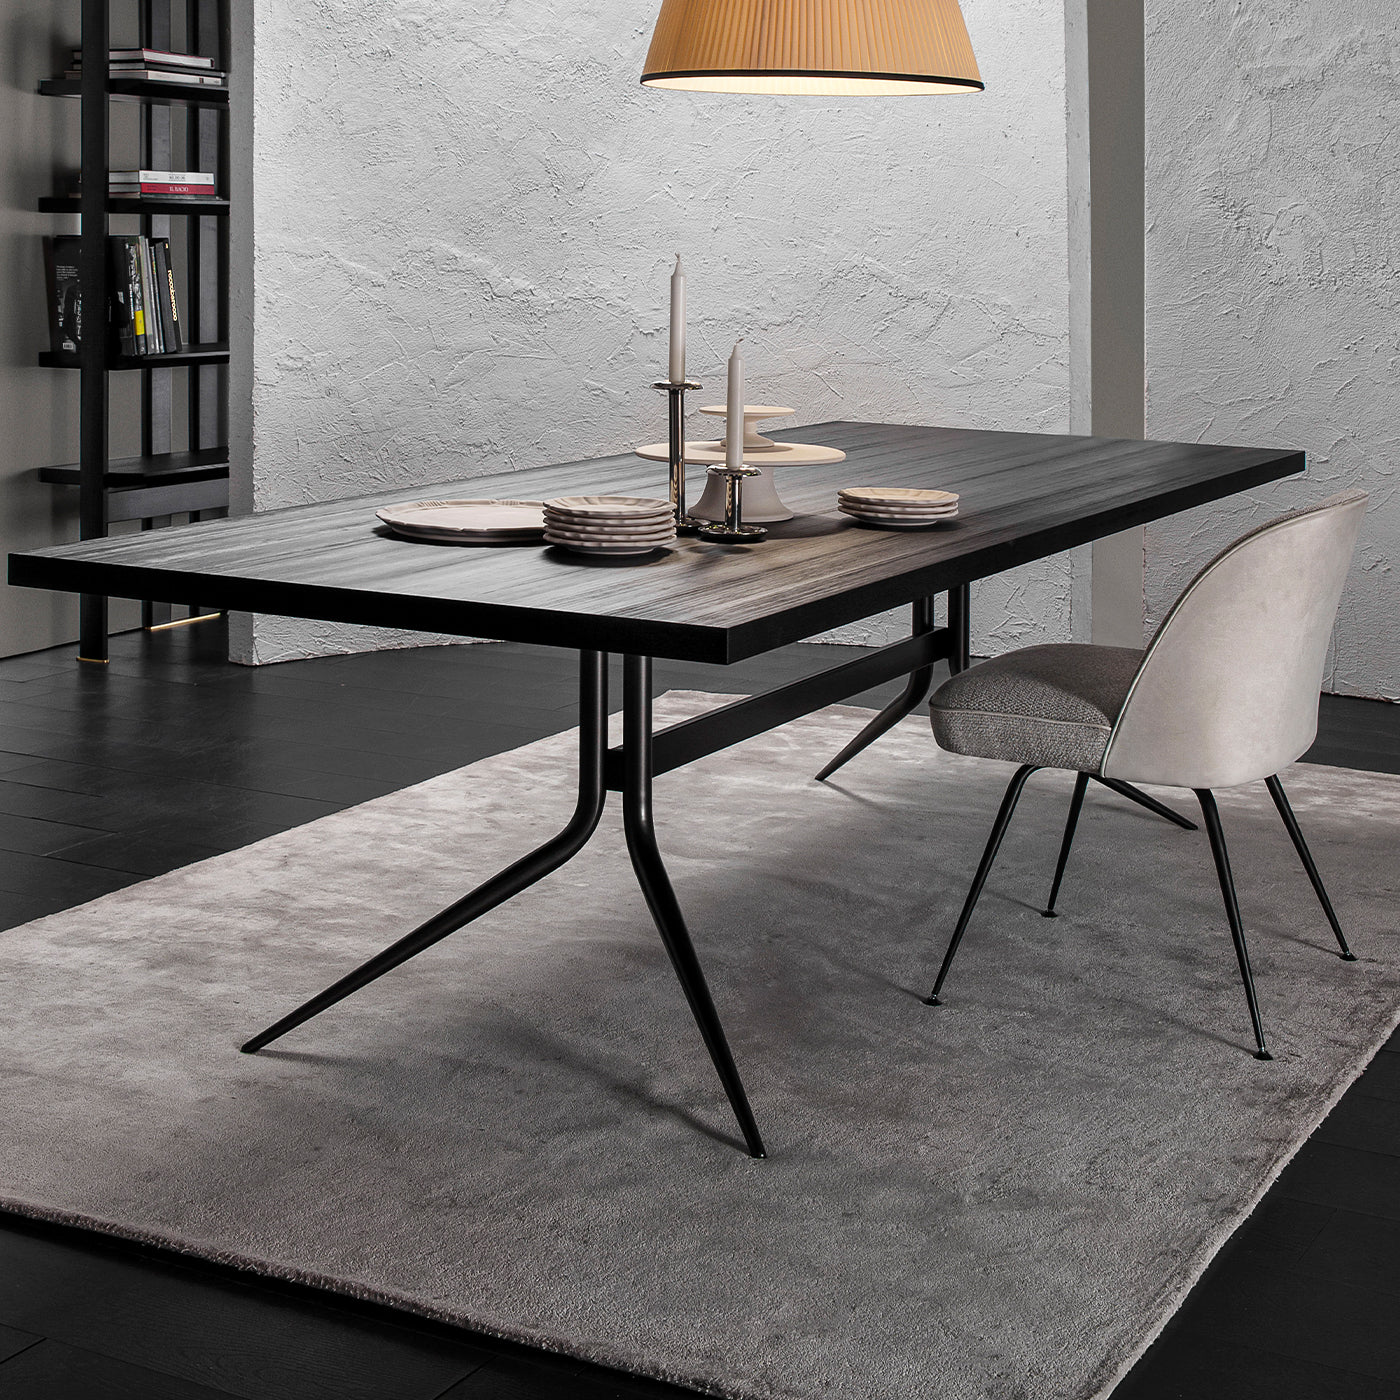 Like 1400 Gray Chair by Gianluigi Landoni - Alternative view 5